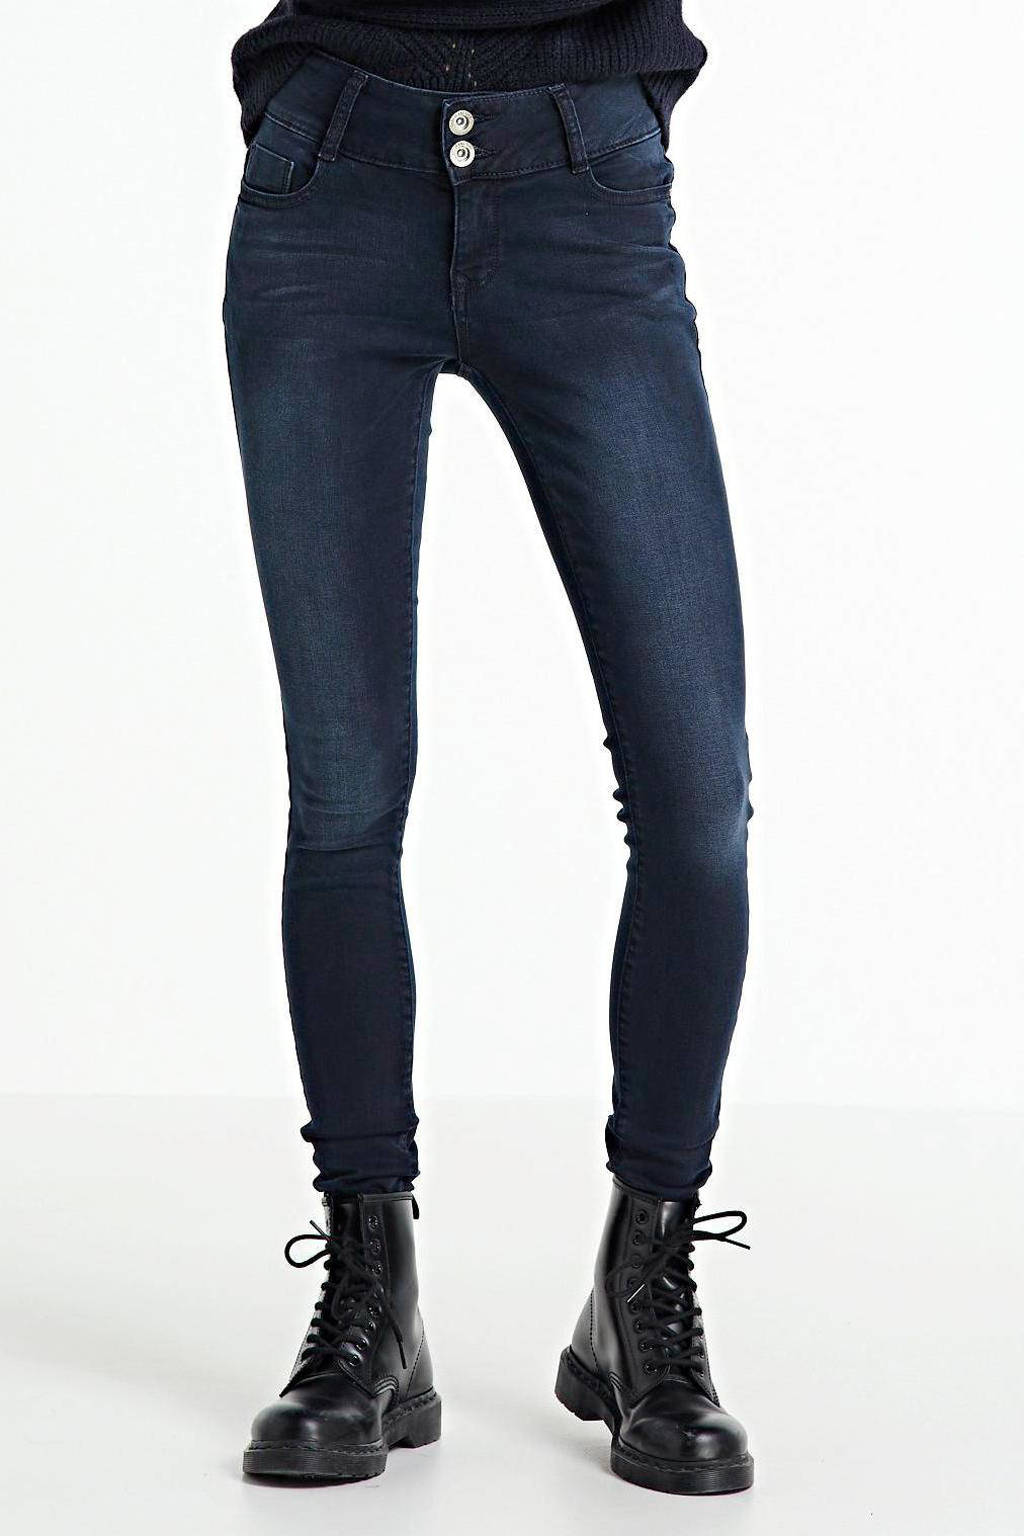 Geurig Trouw Vertrouwen op Cars skinny jeans Amazing blue black | wehkamp